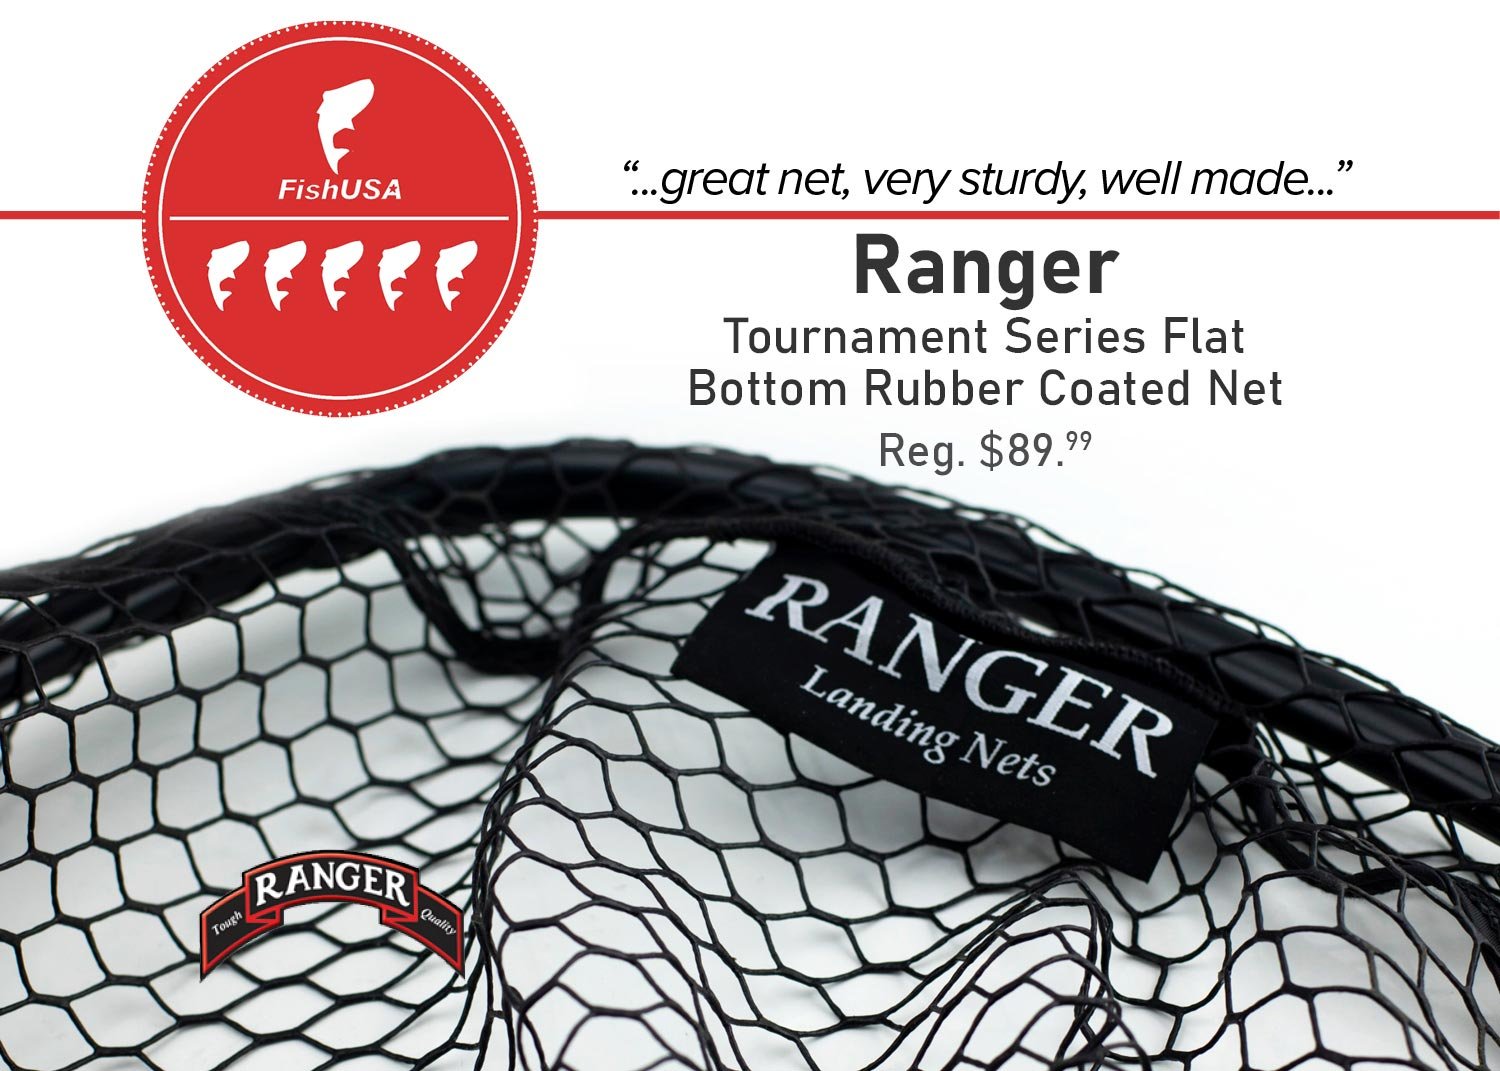 Ranger Tournament Series Flat Bottom Rubber Coated Net